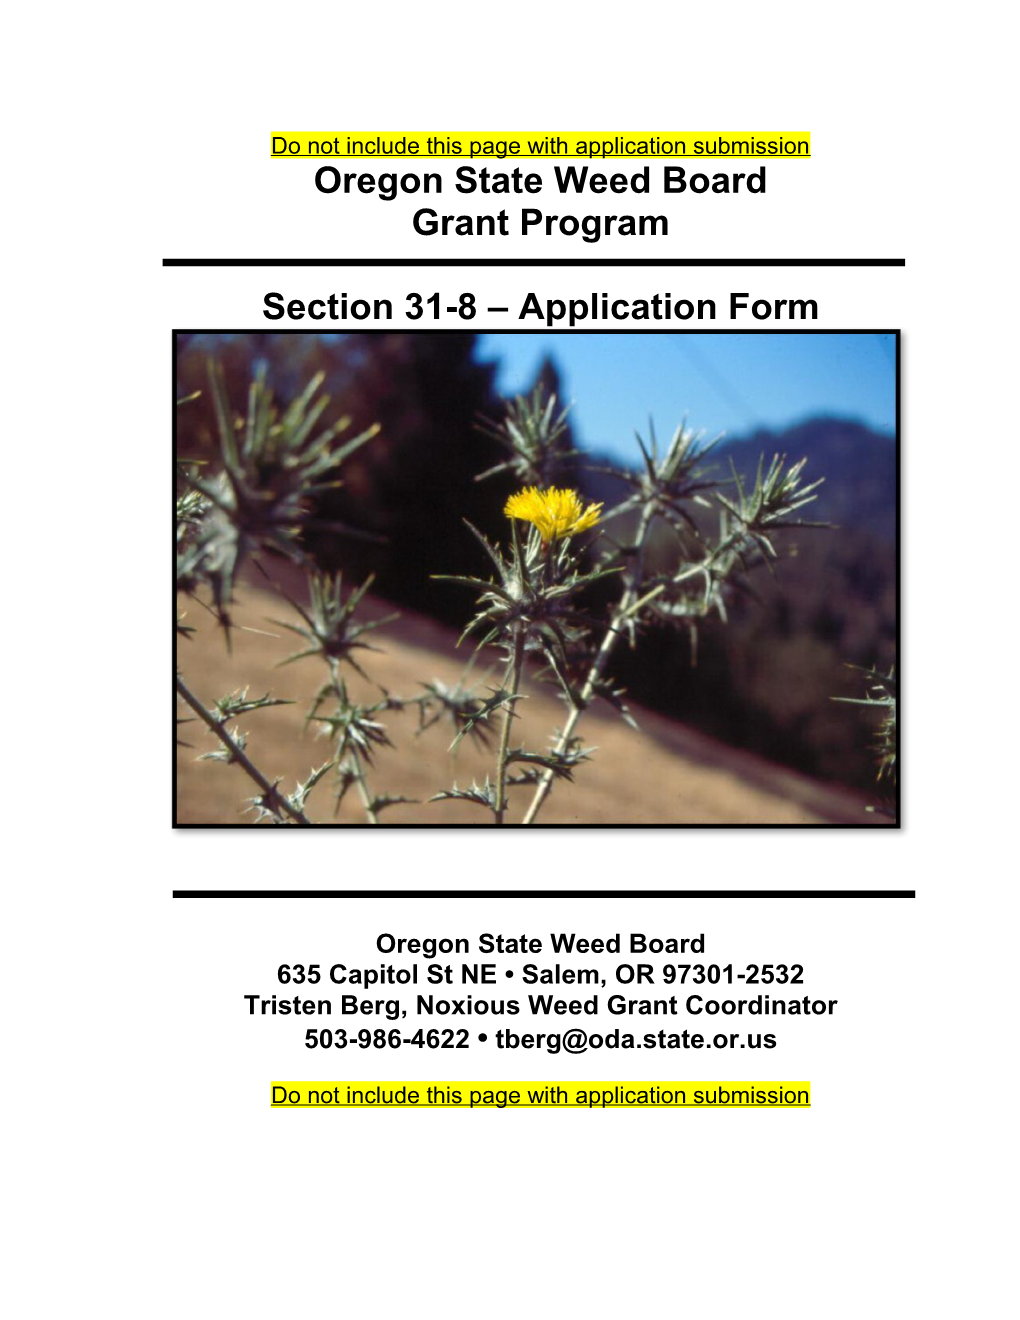 Oregon State Weed Board Grant Program Application (2018)